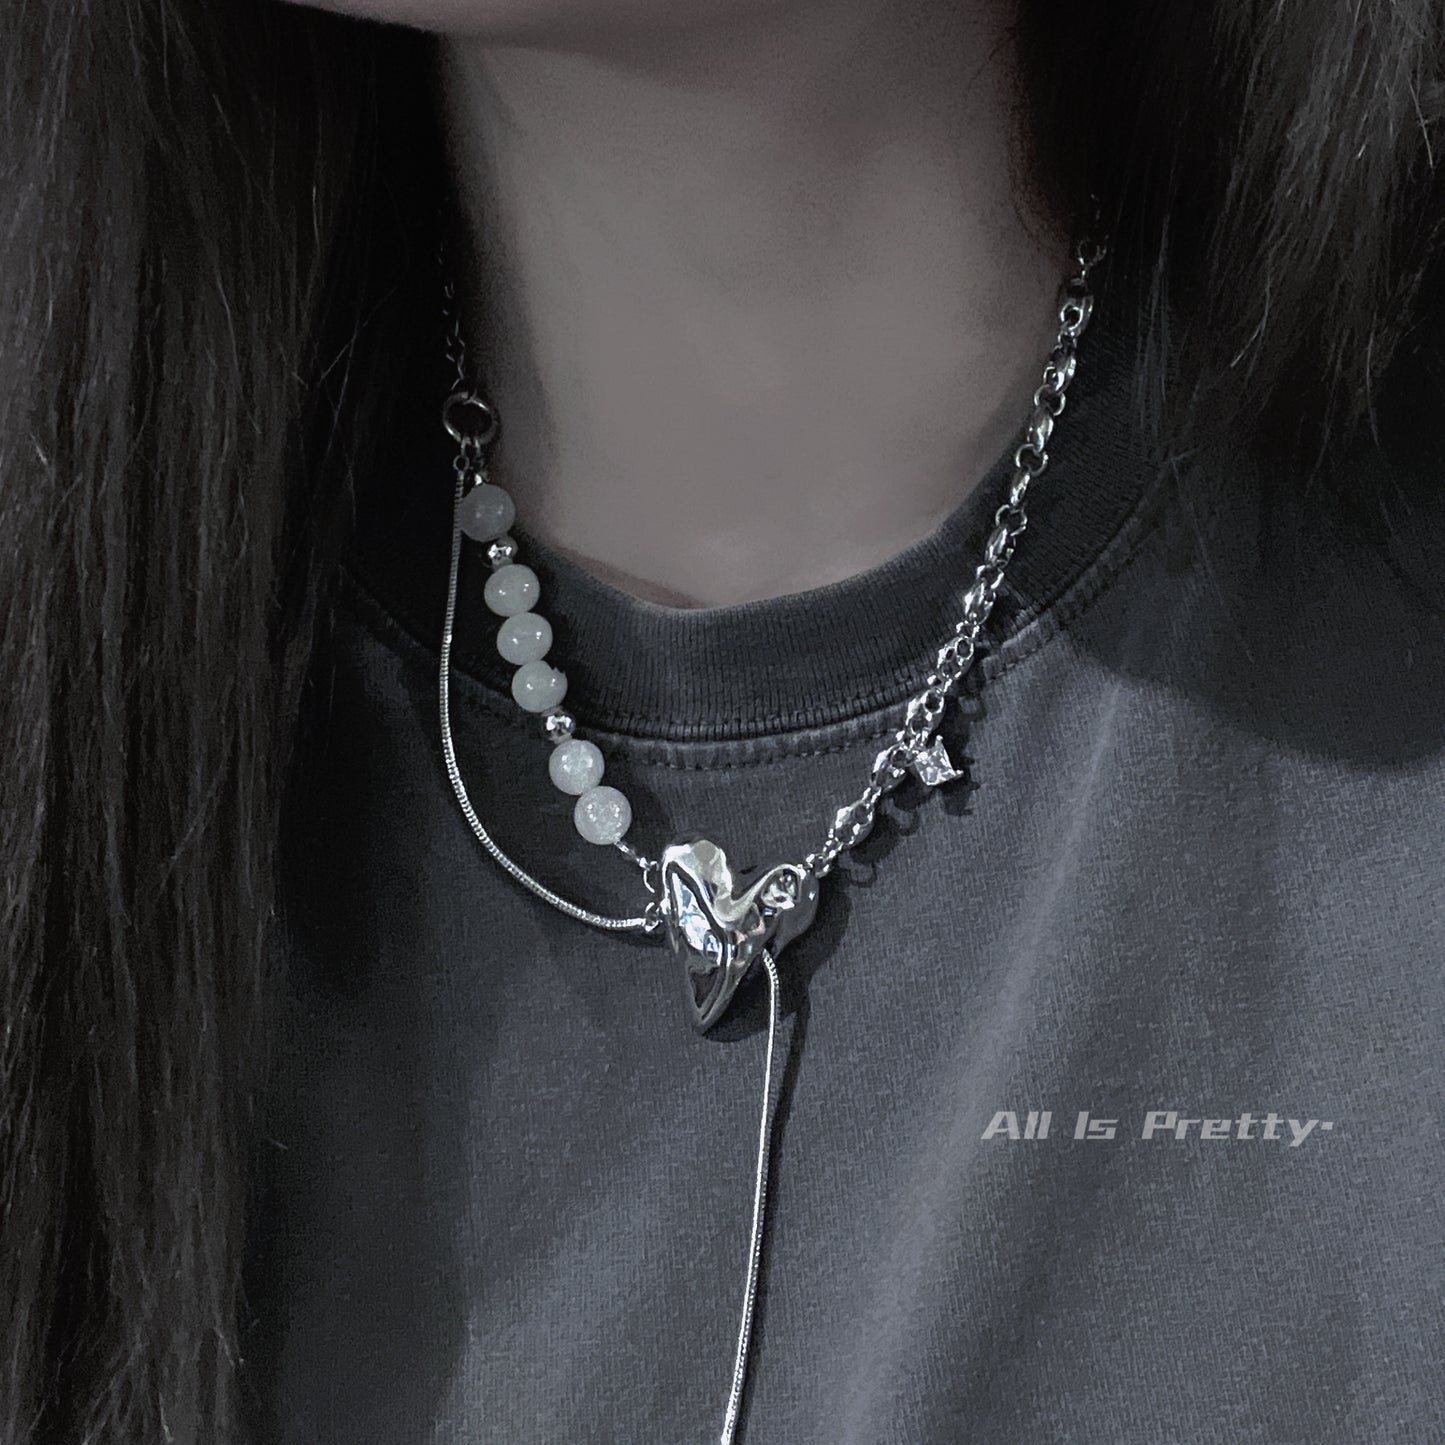 Stylish layered chain necklace